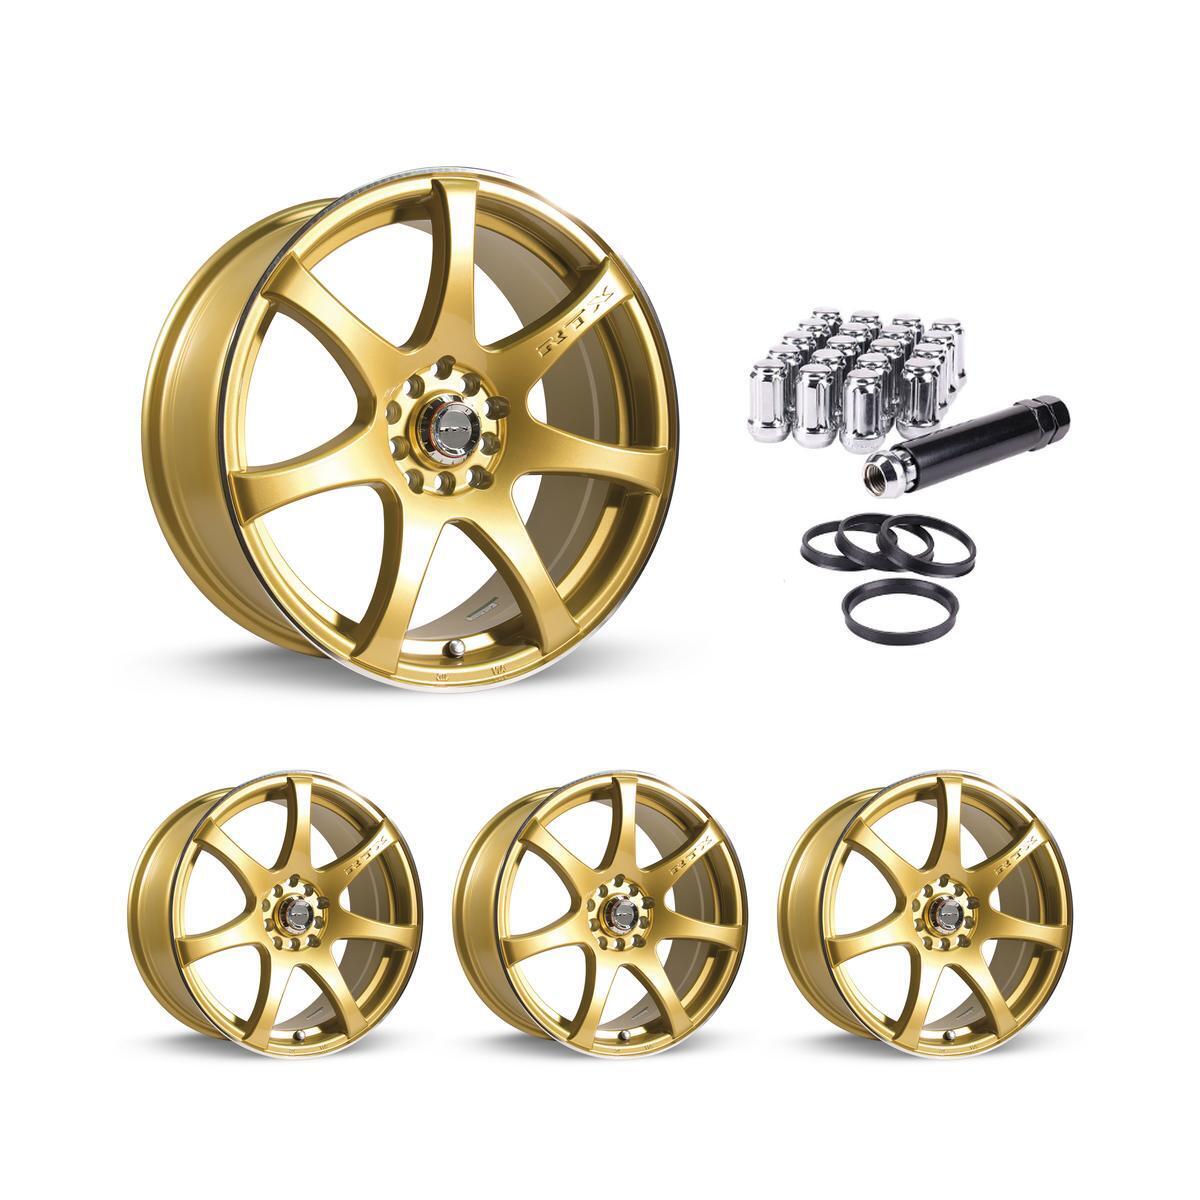 Wheel Rims Set with Chrome Lug Nuts Kit for 92-96 Mazda MX-3 P814350 15 inch